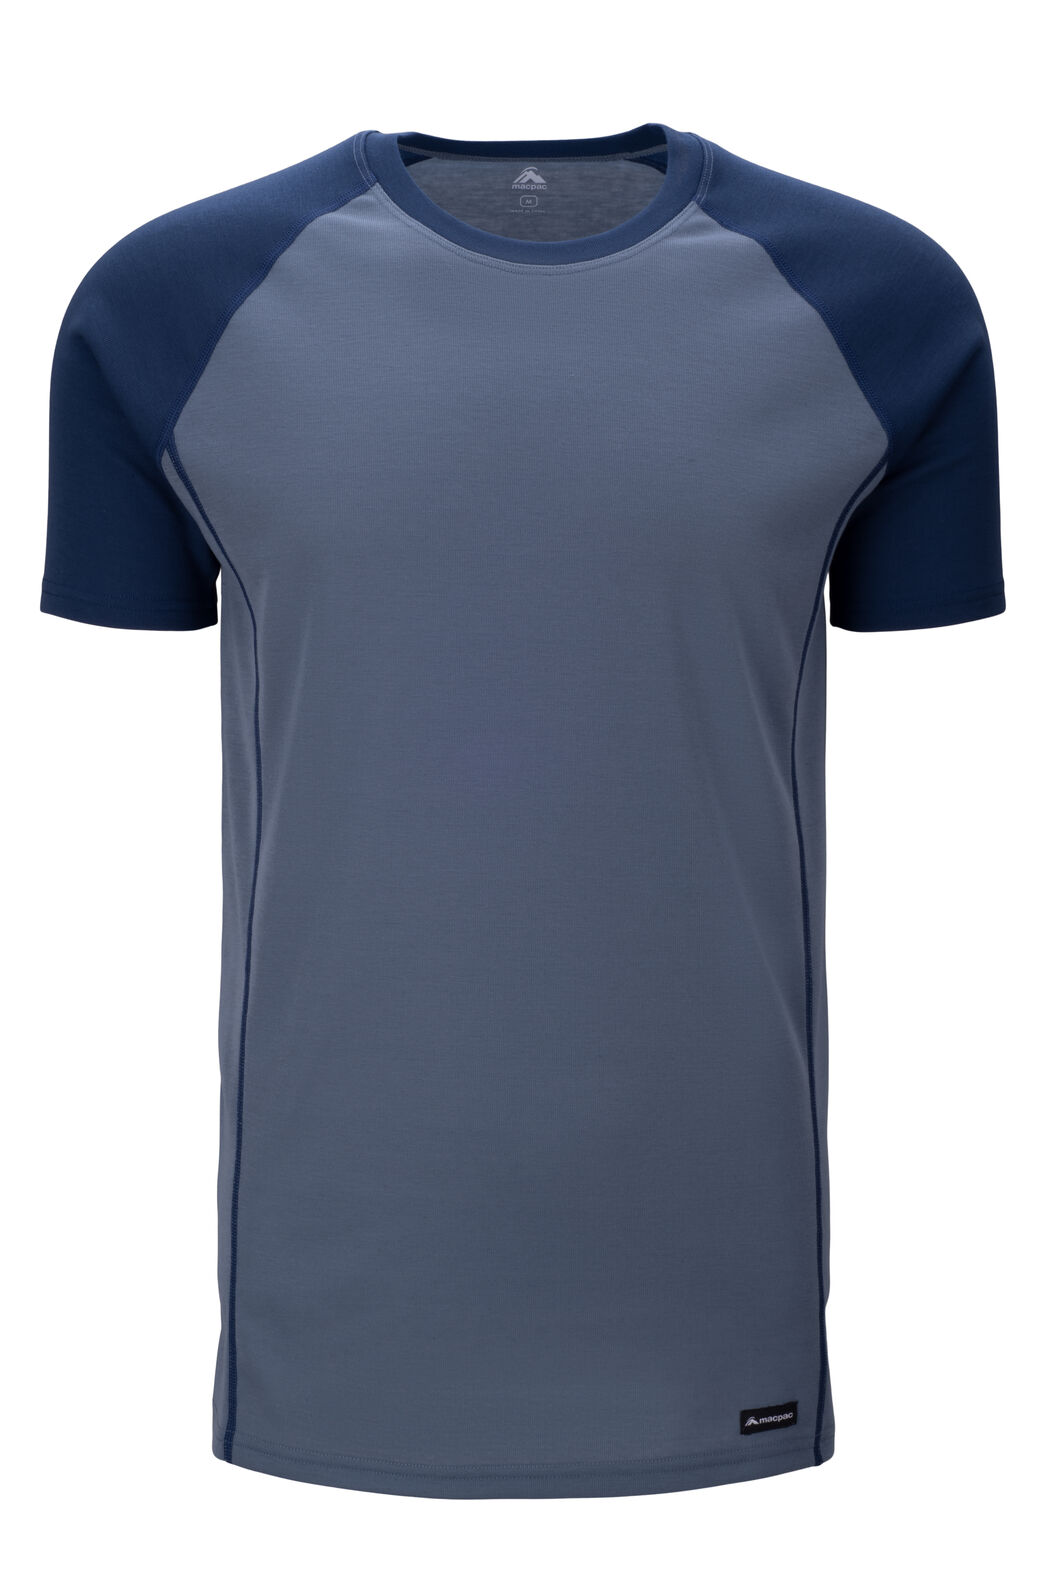 Macpac Men's Geothermal Short Sleeve Top, Blue Mirage/Insignia, hi-res